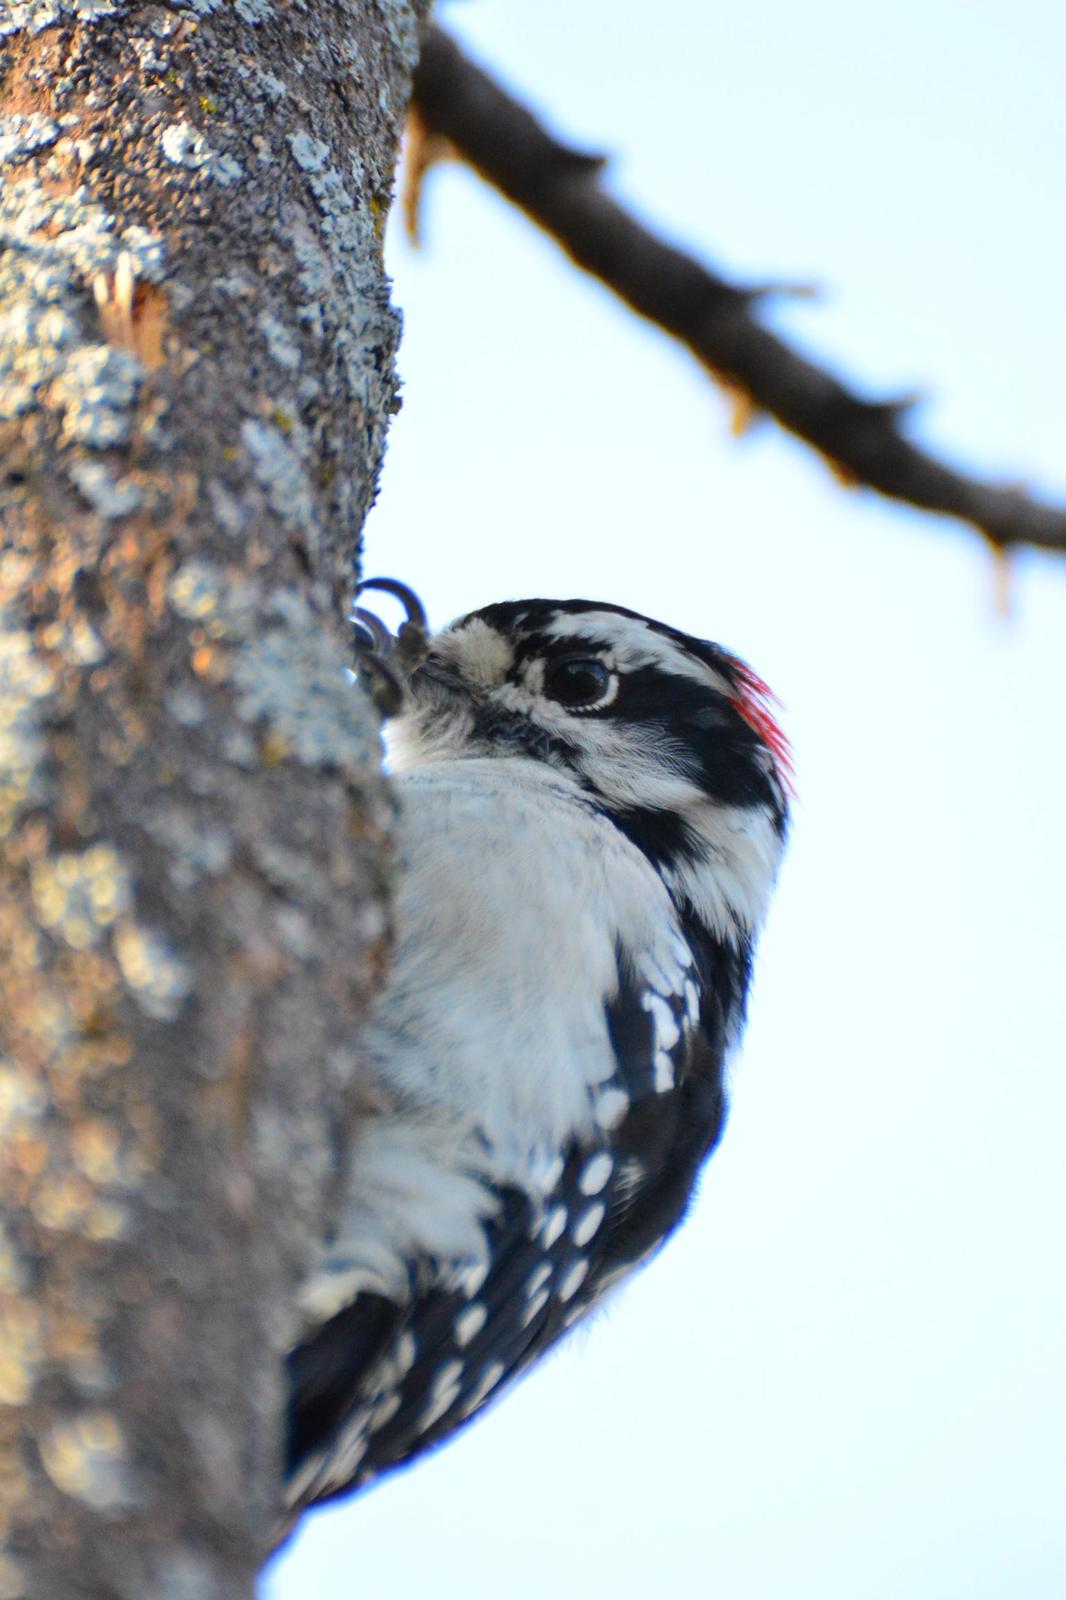 Downy Woodpecker Photo by Linda Cote